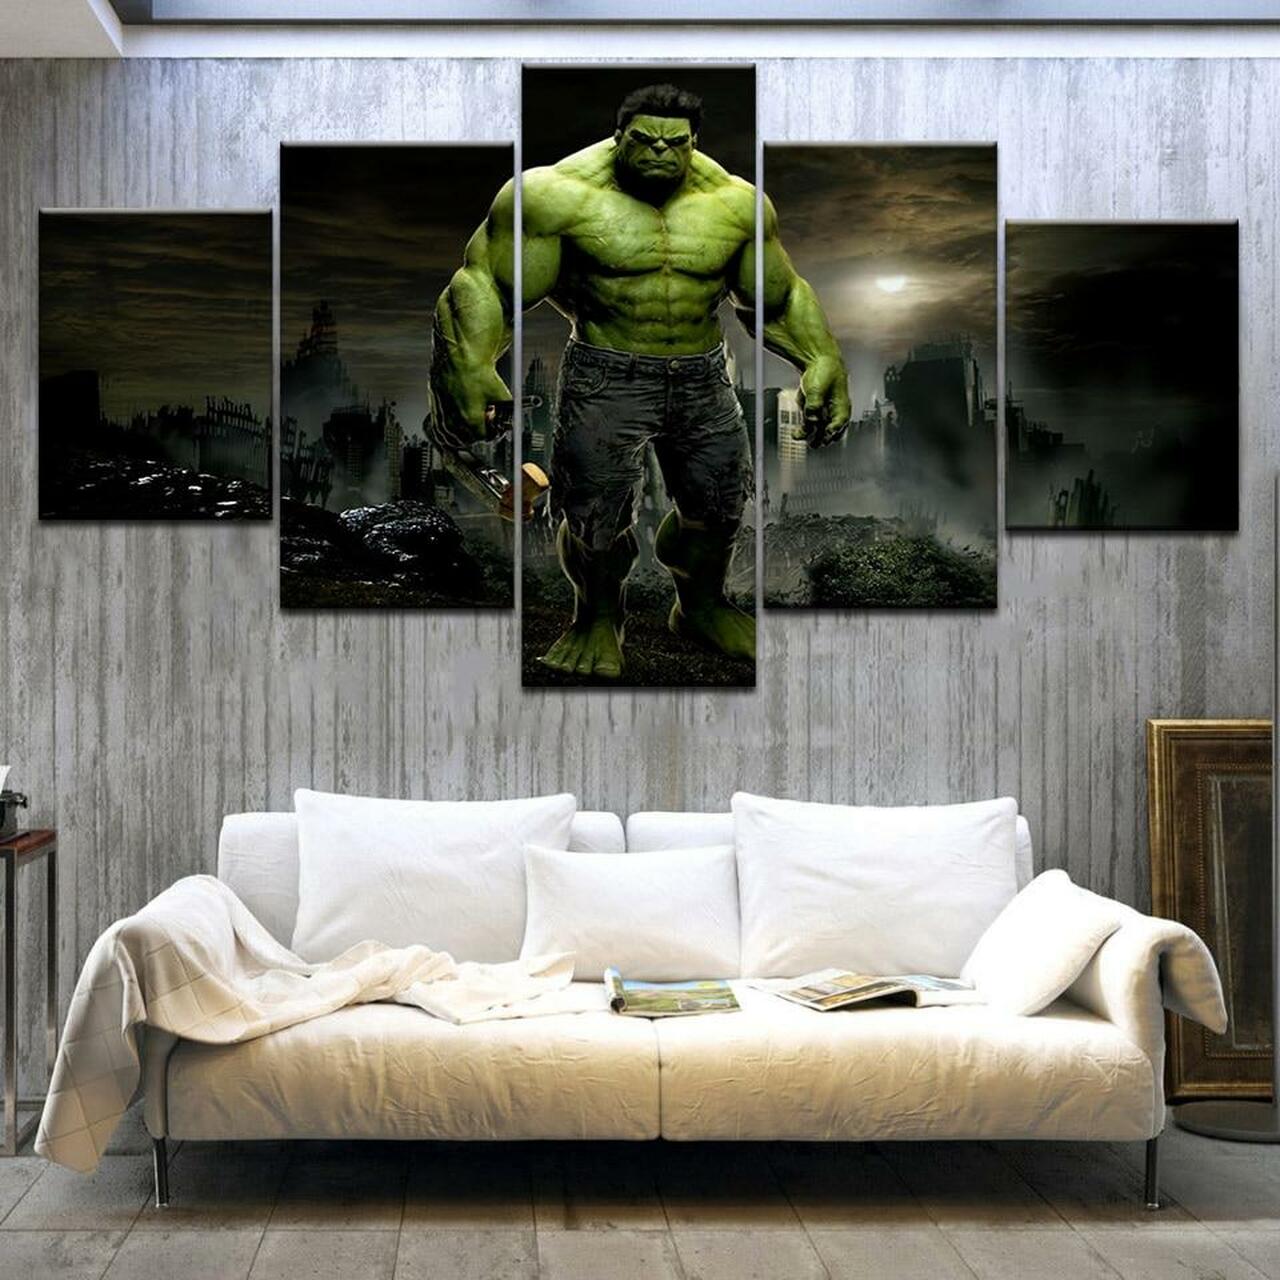 The Incredible Hulk 5 Piece Canvas Art Wall Decor